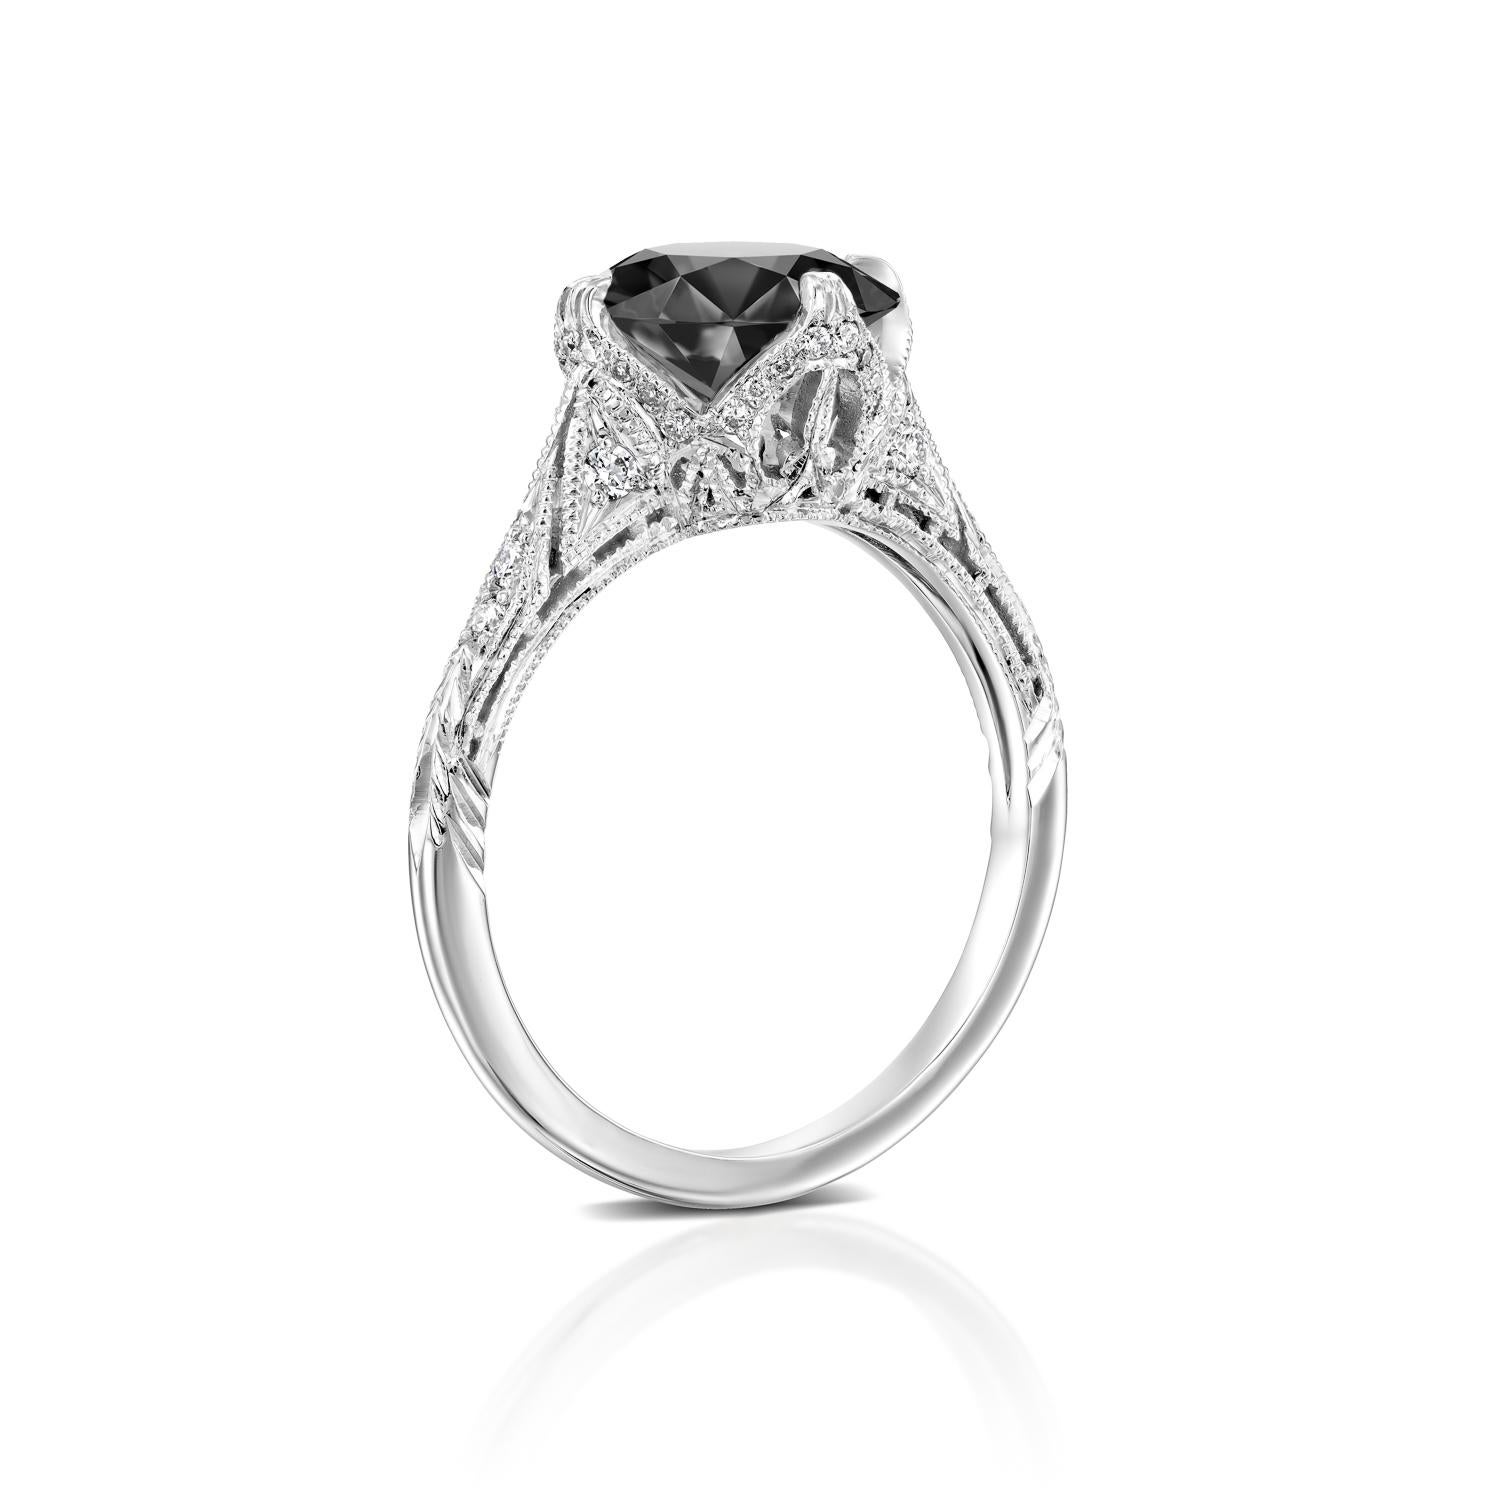 2 carat black diamond ring